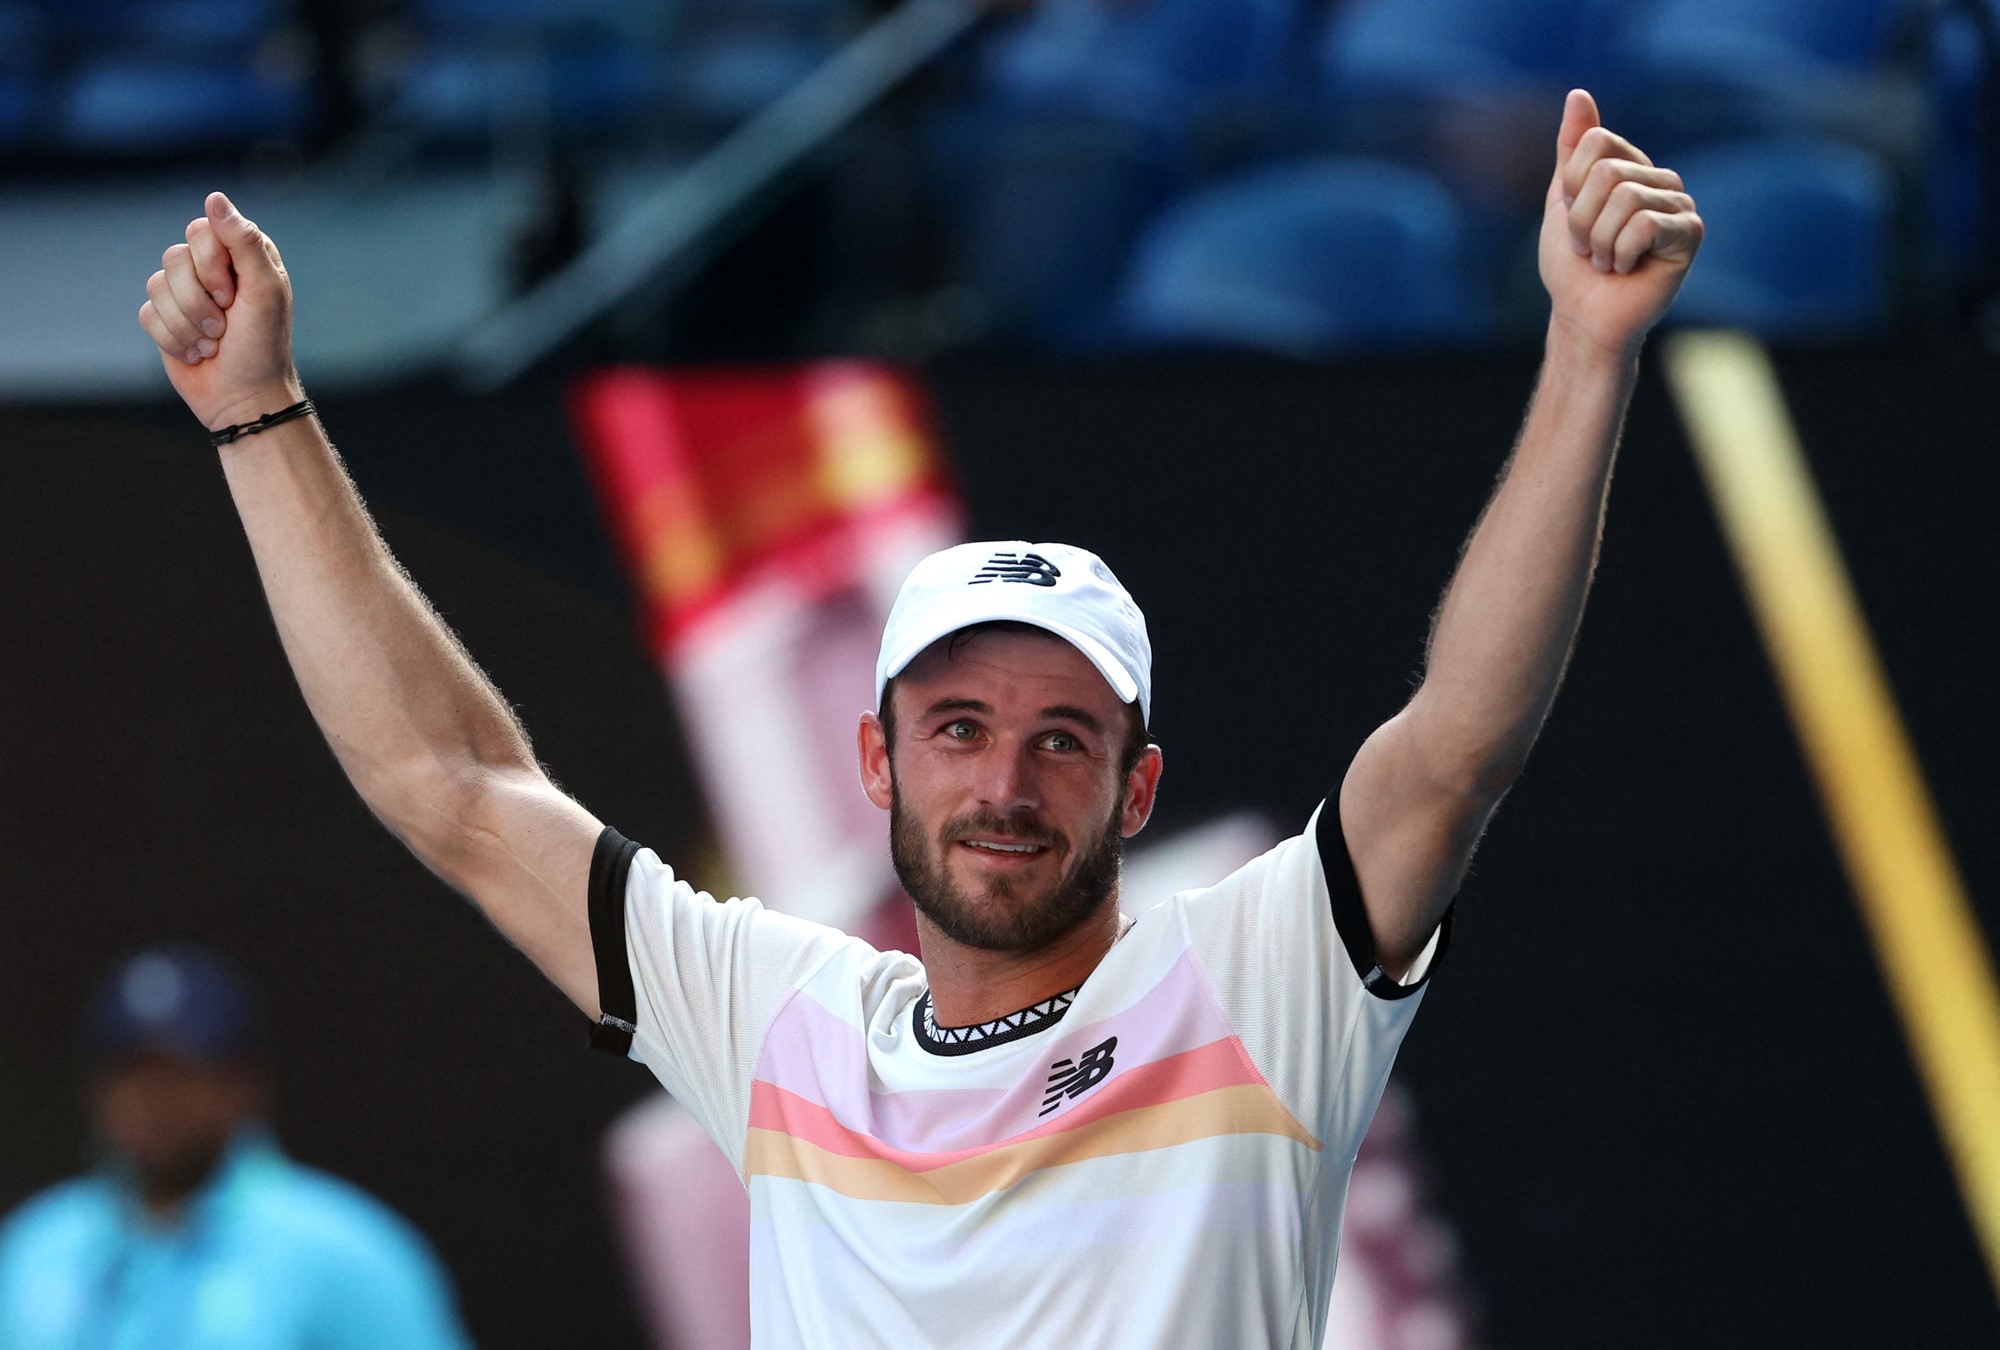 A tennis player raises his arms.